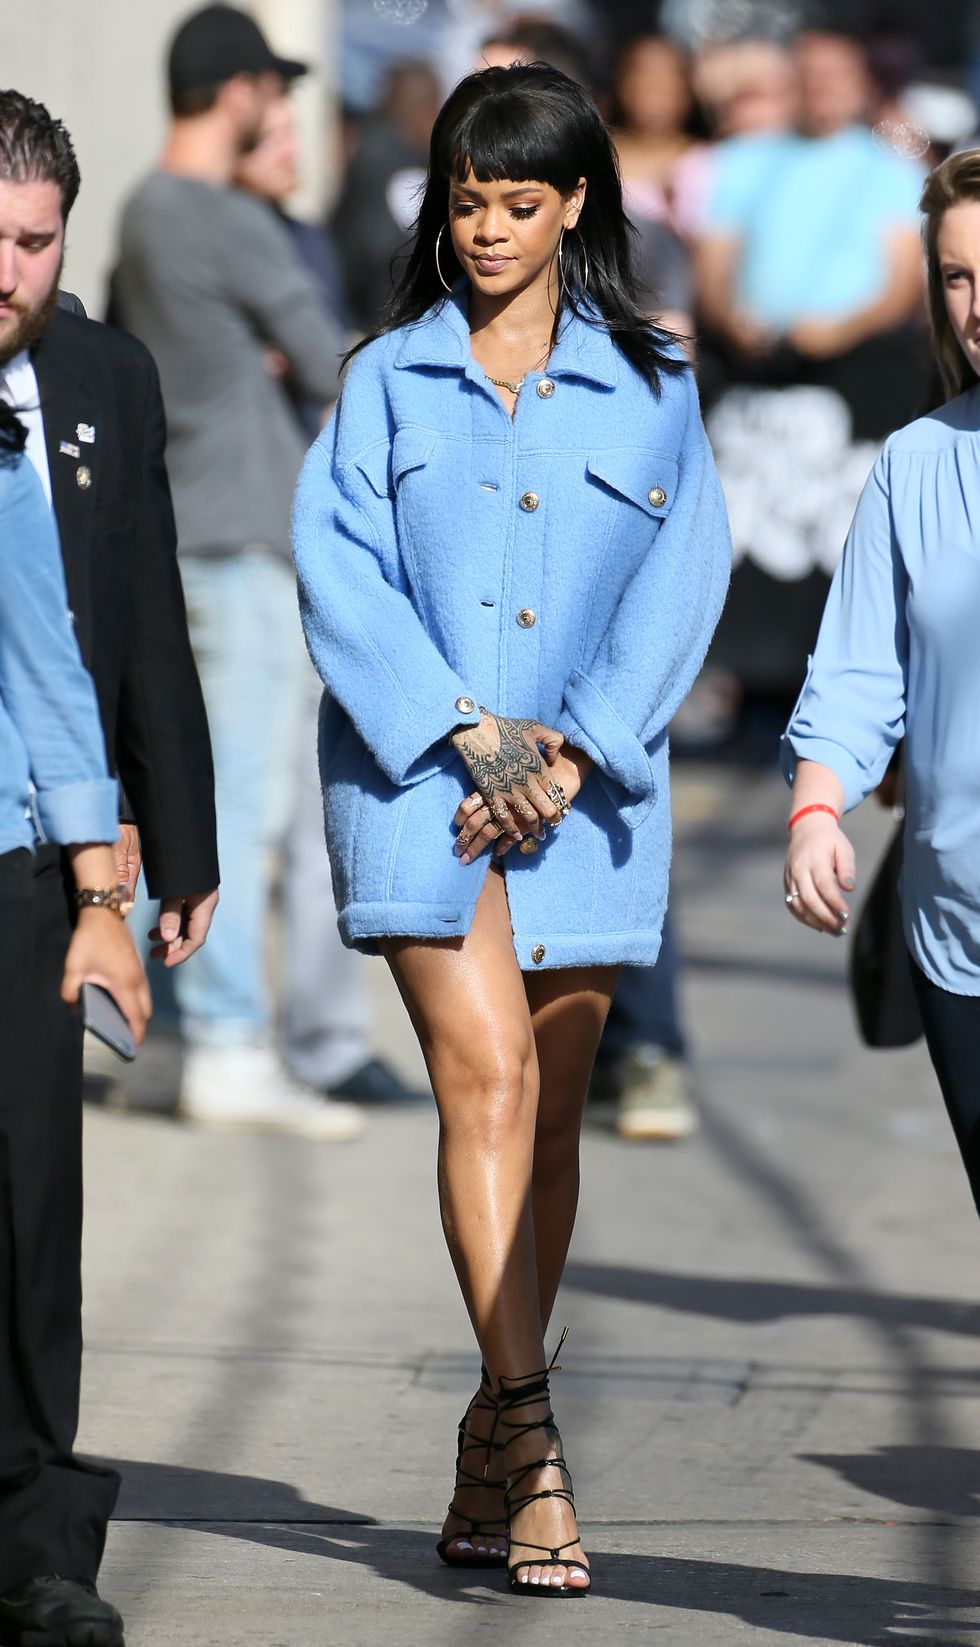 Rihanna wearing a blue coat for Jimmy Kimmel Live appearance